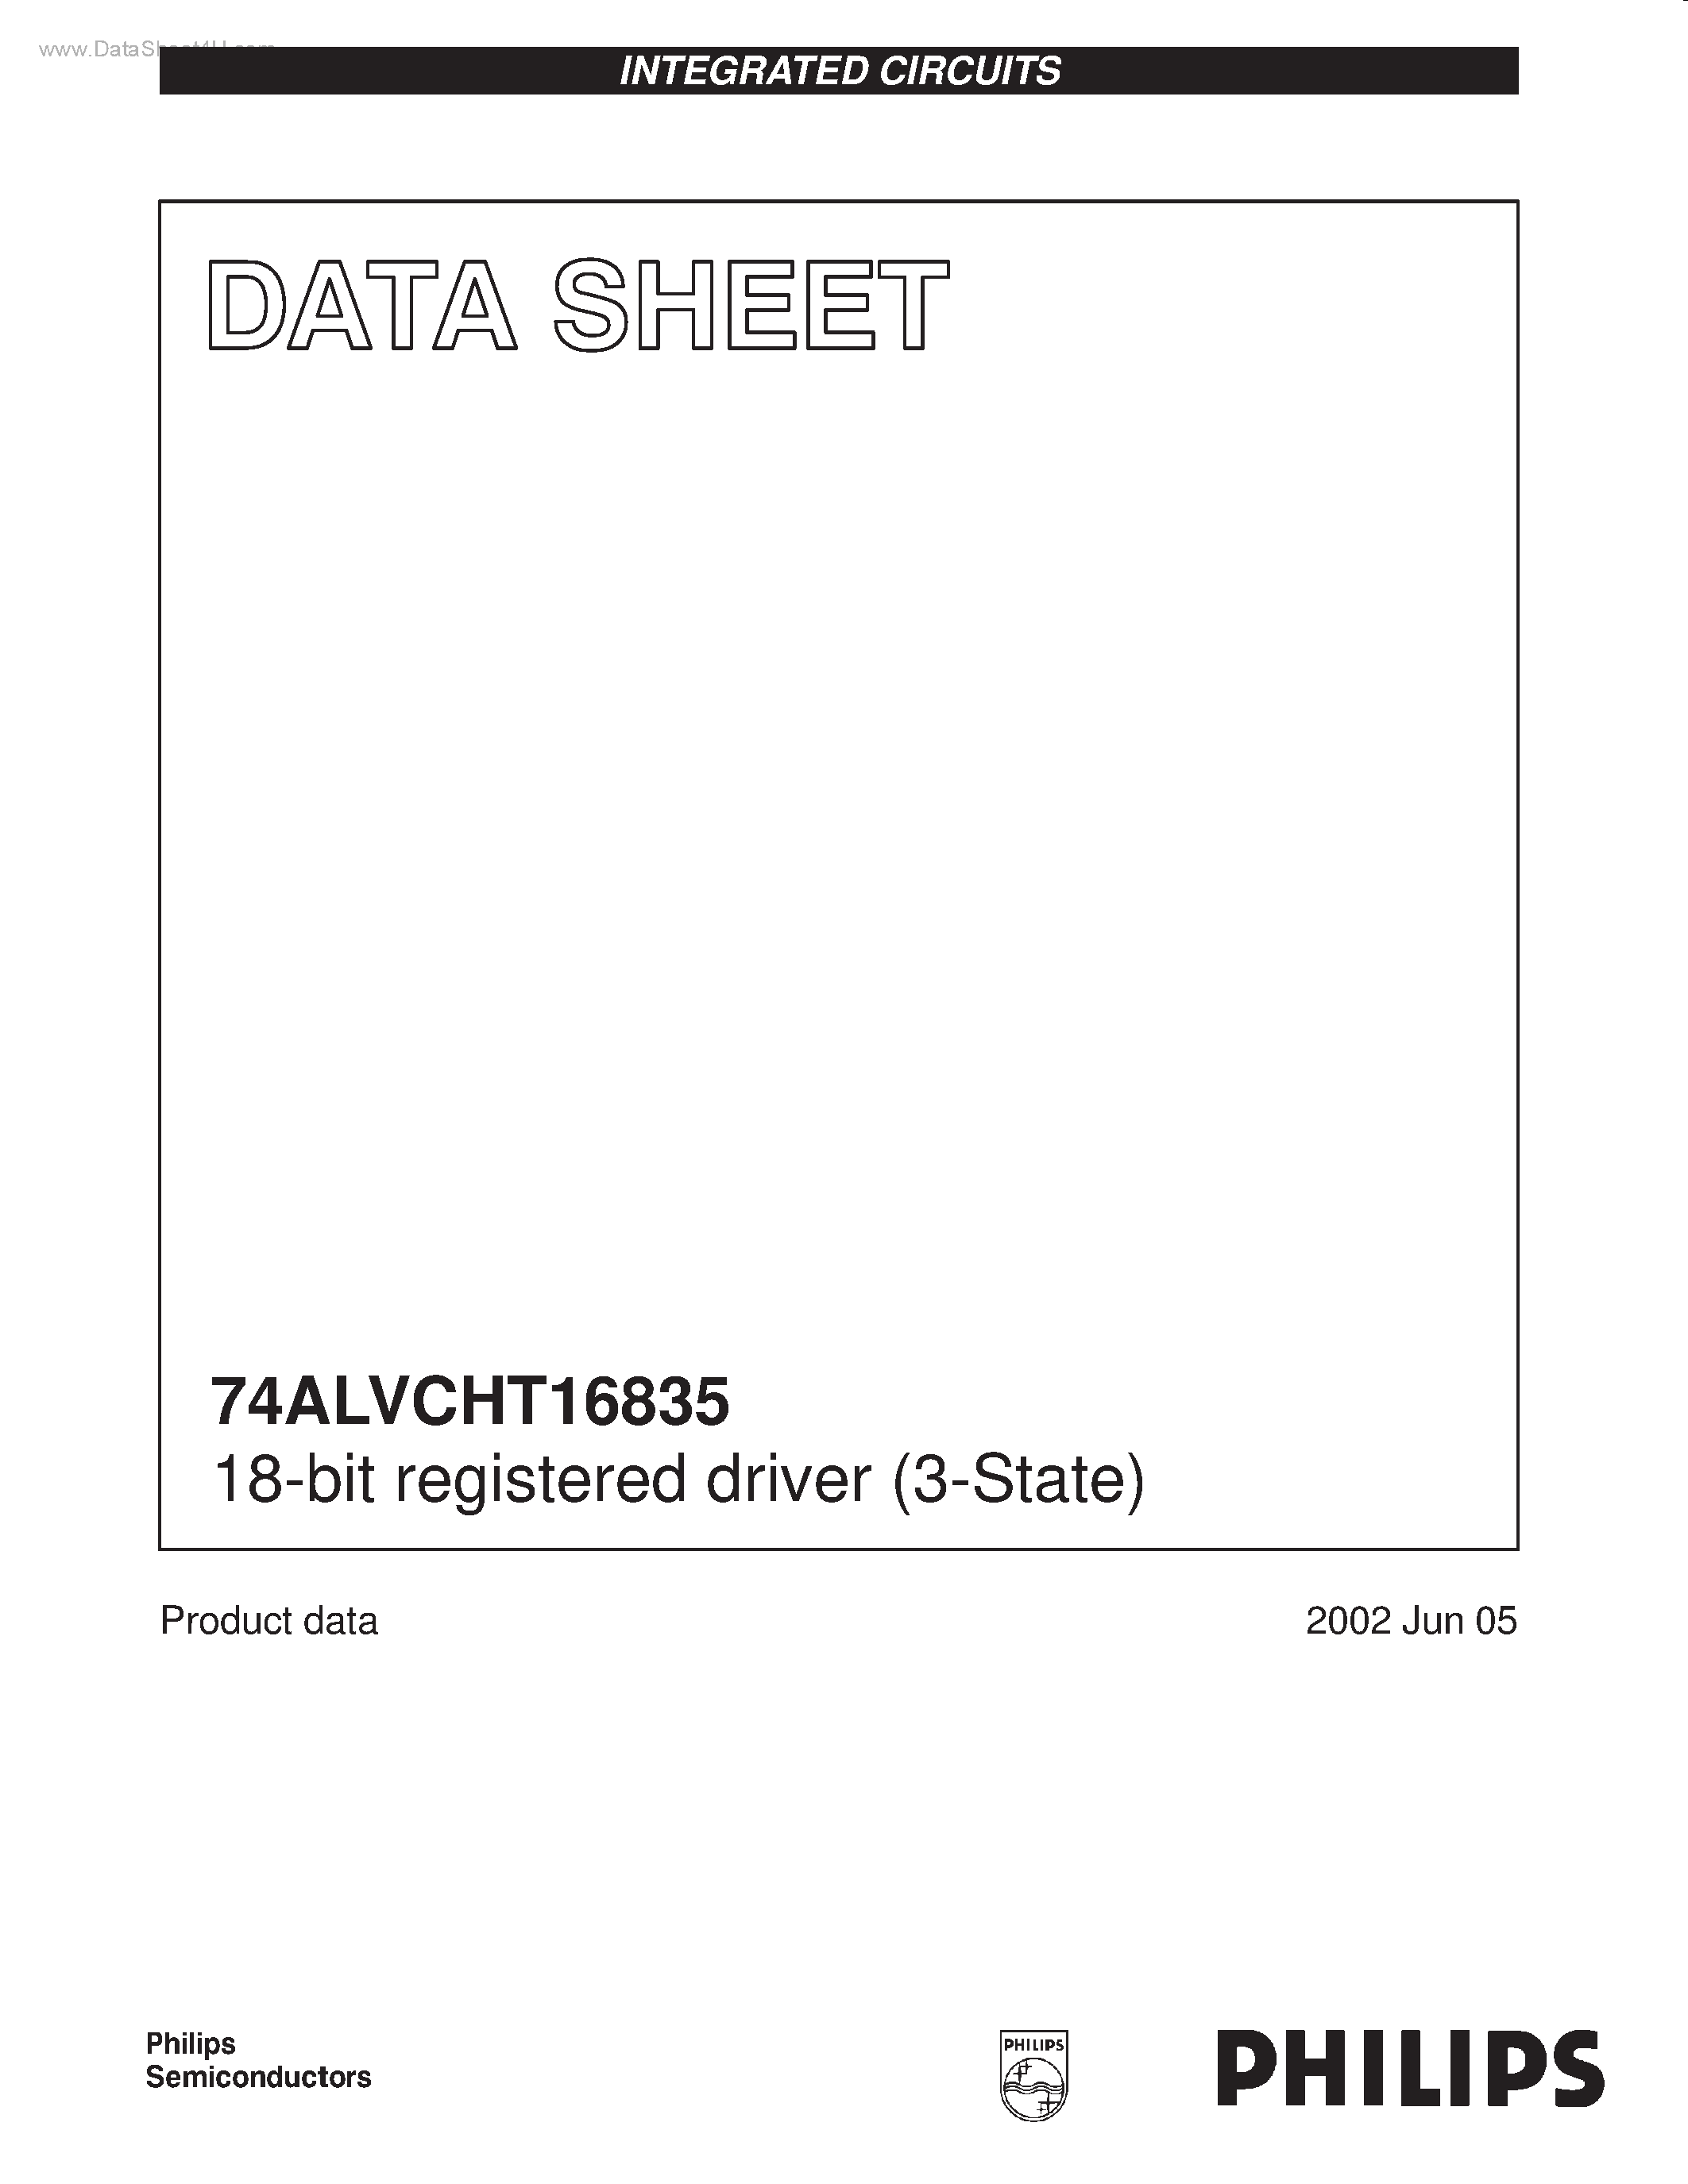 Даташит 74ALVCHT16835 - 18-bit registered driver страница 1